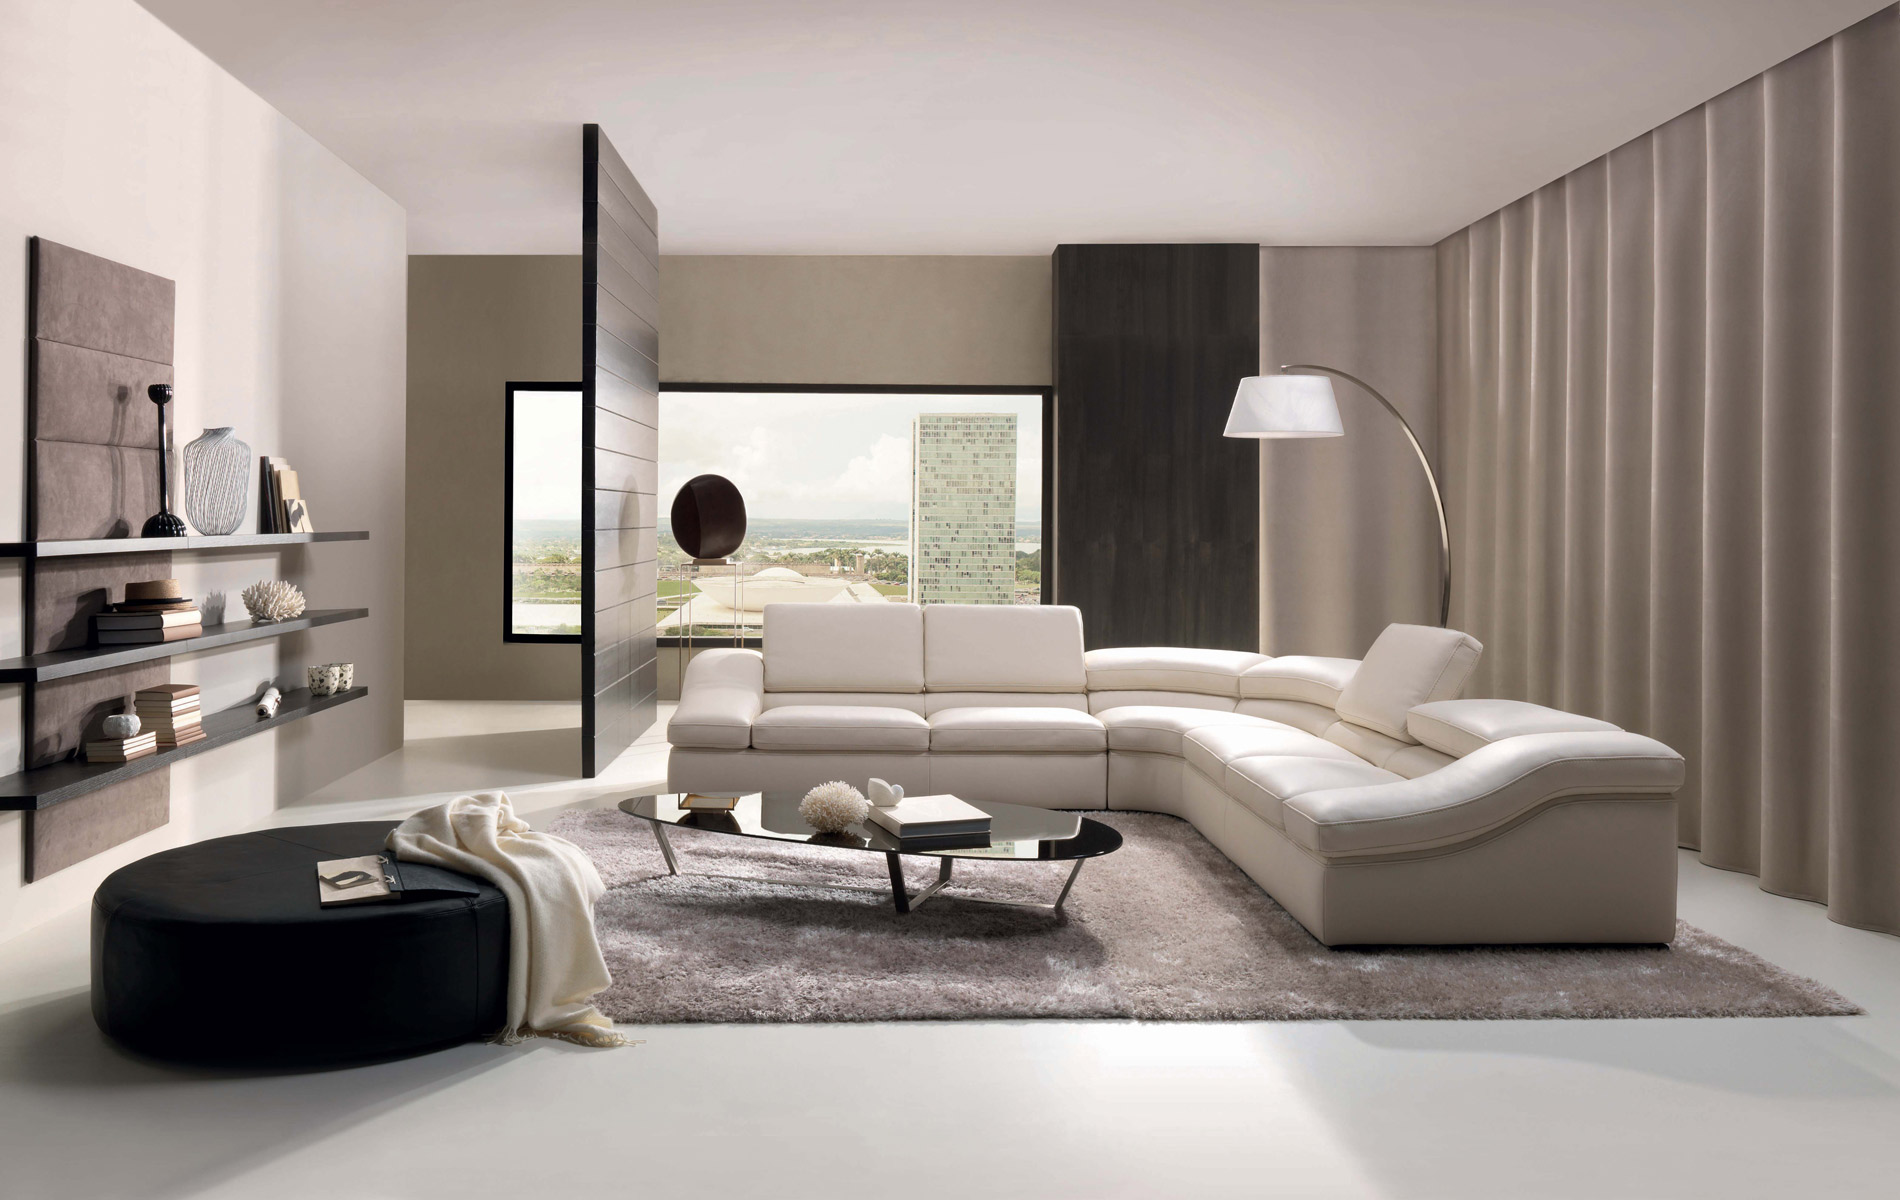 Stunning Modern Living Room Interior Design Ideas 1900 x 1200 · 324 kB · jpeg